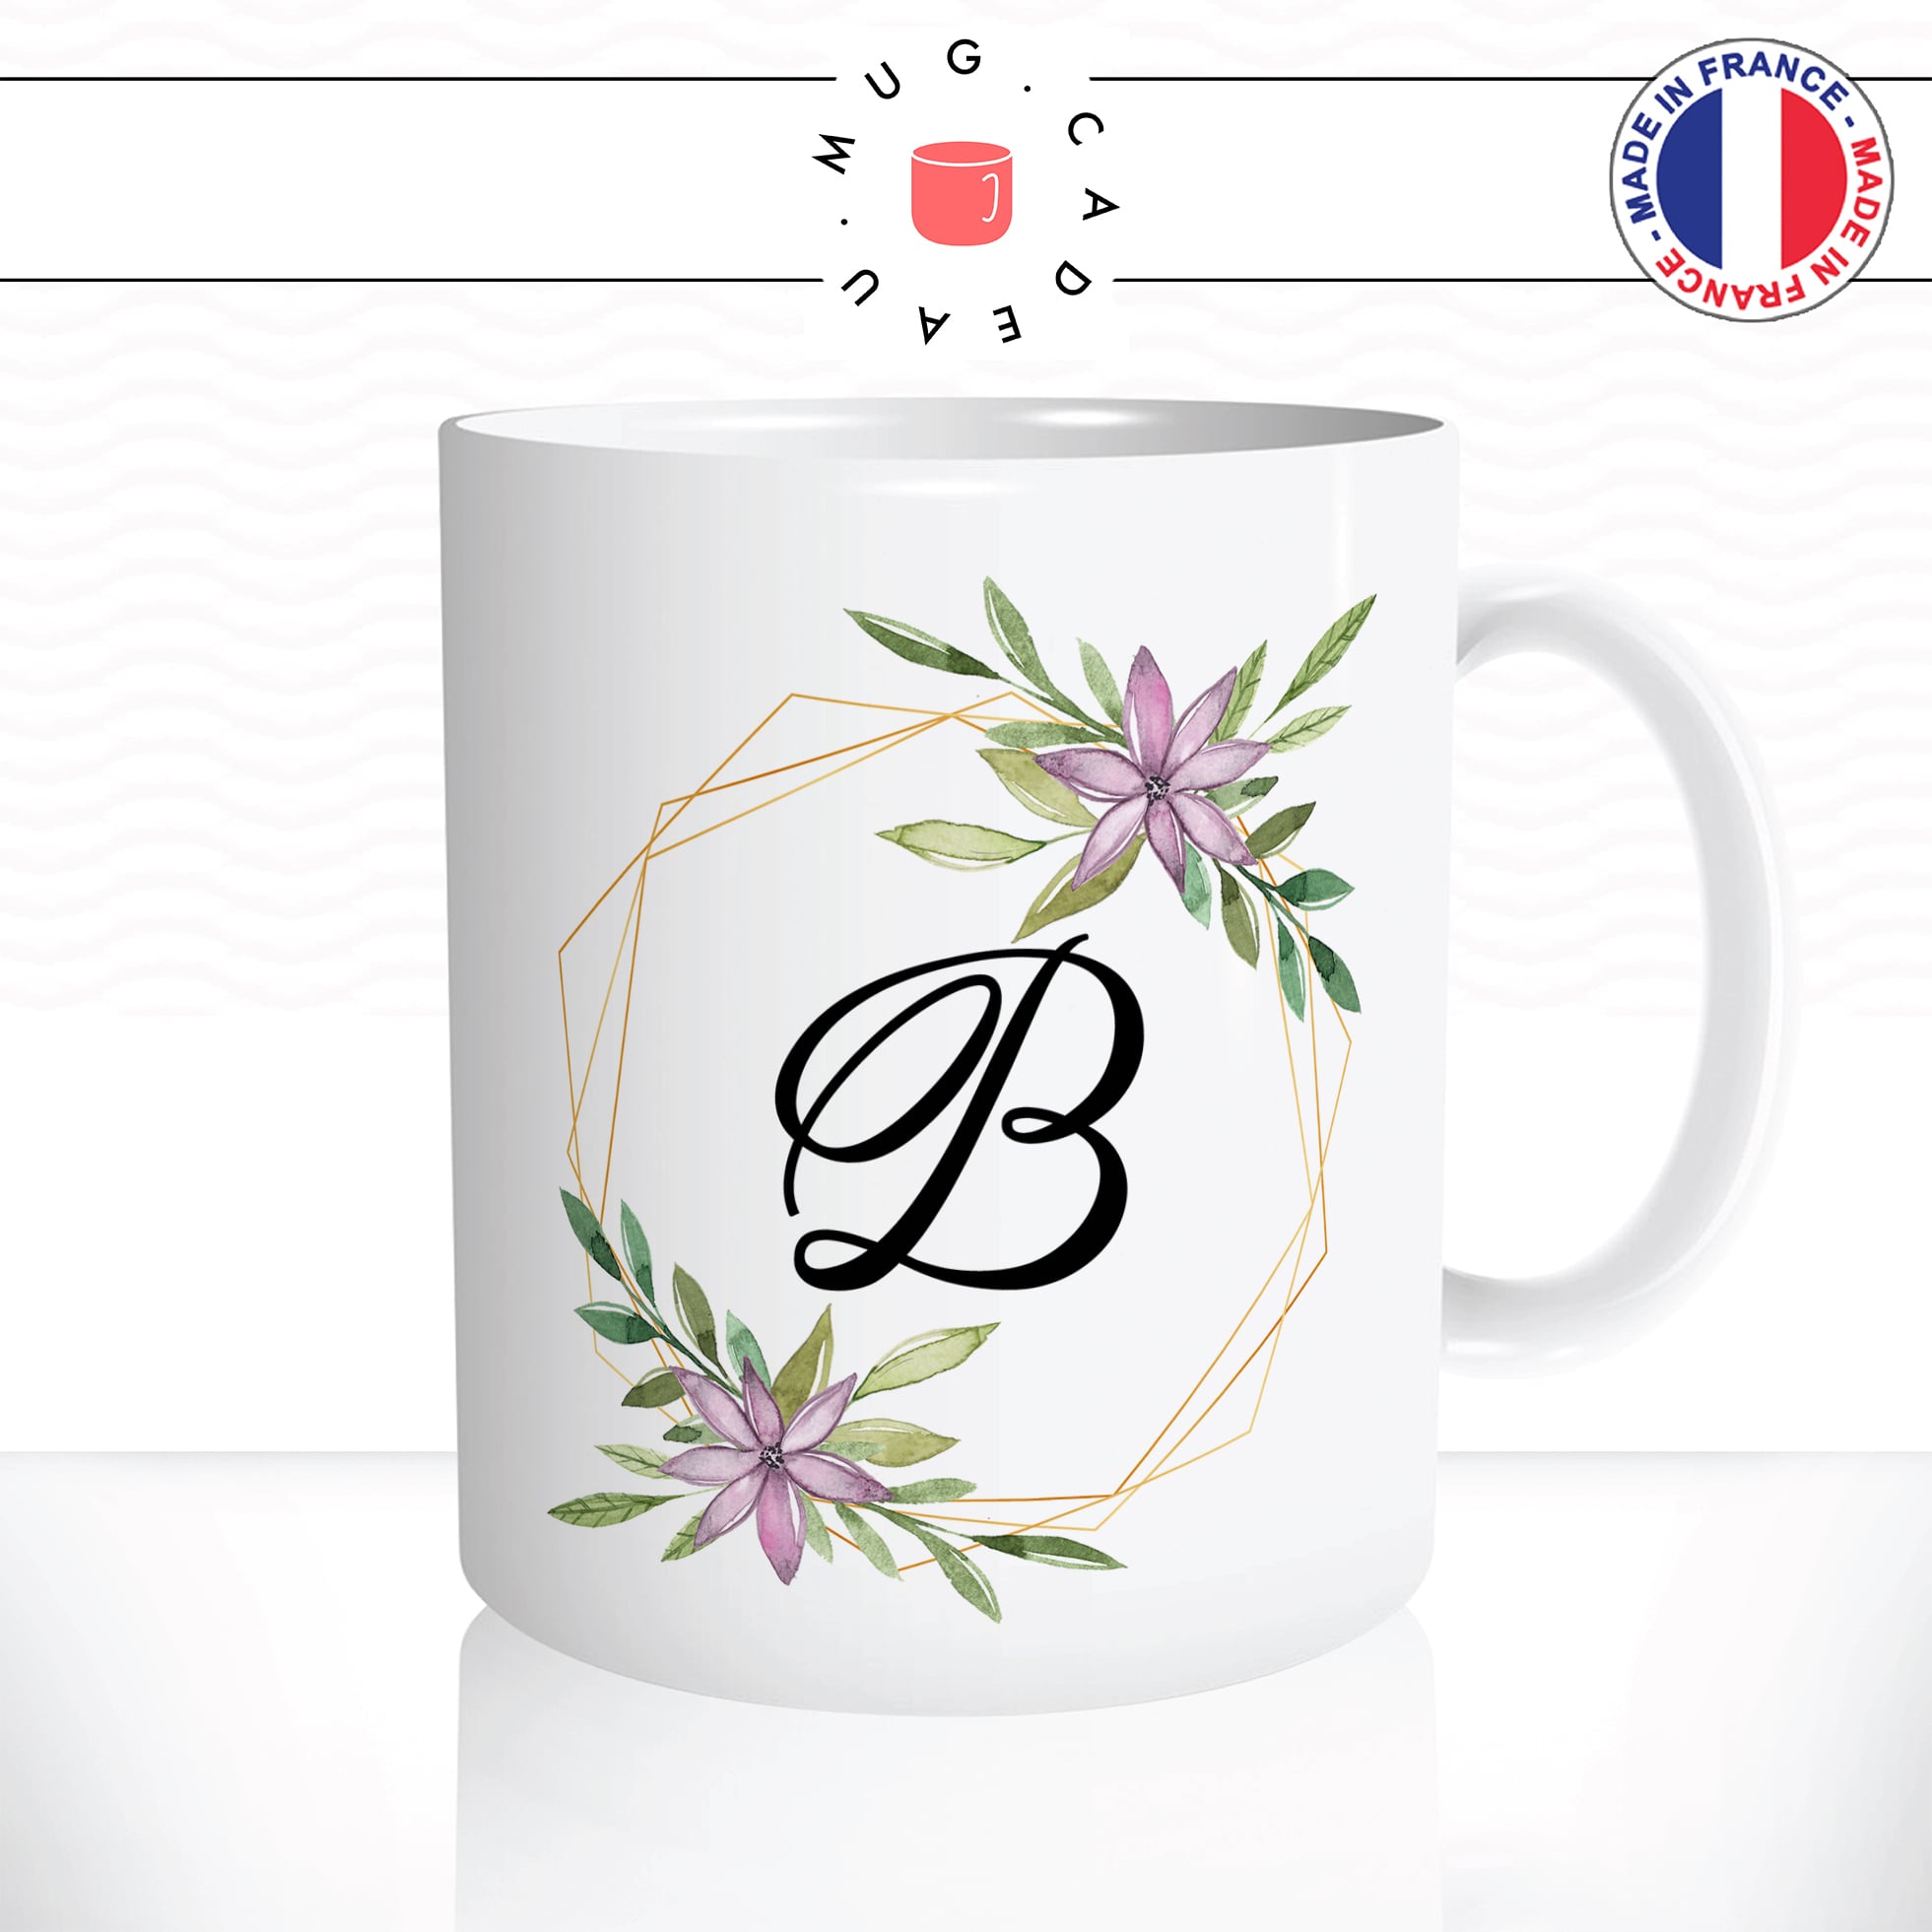 mug-tasse-initiale-fleurs-prénom-nom-lettre-b-flower-fun-matin-café-thé-mugs-tasses-idée-cadeau-original-personnalisée2-min